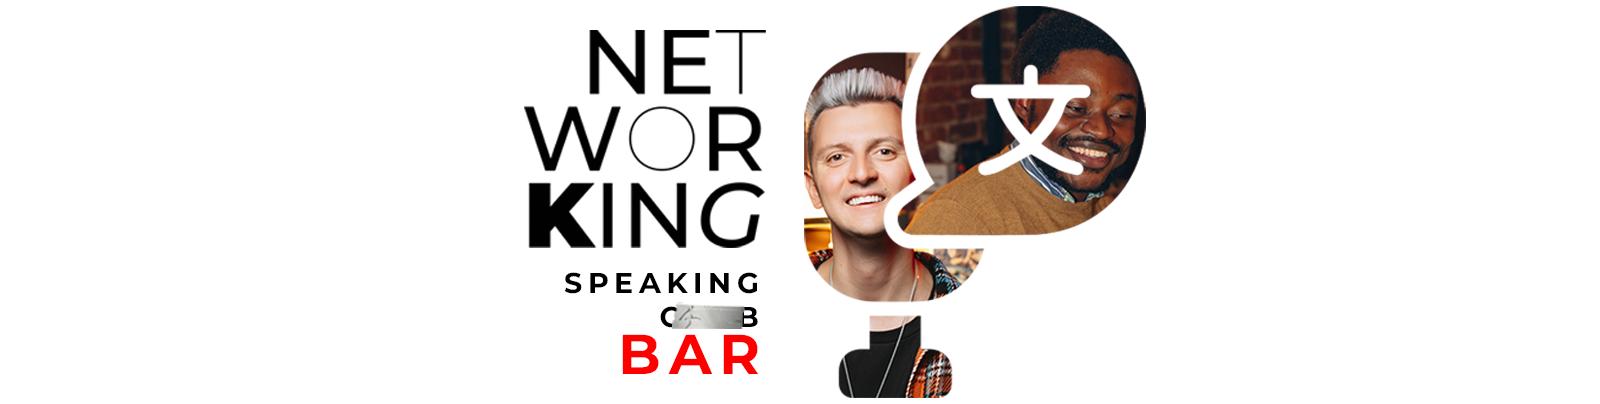 Networking Speaking Bar #6